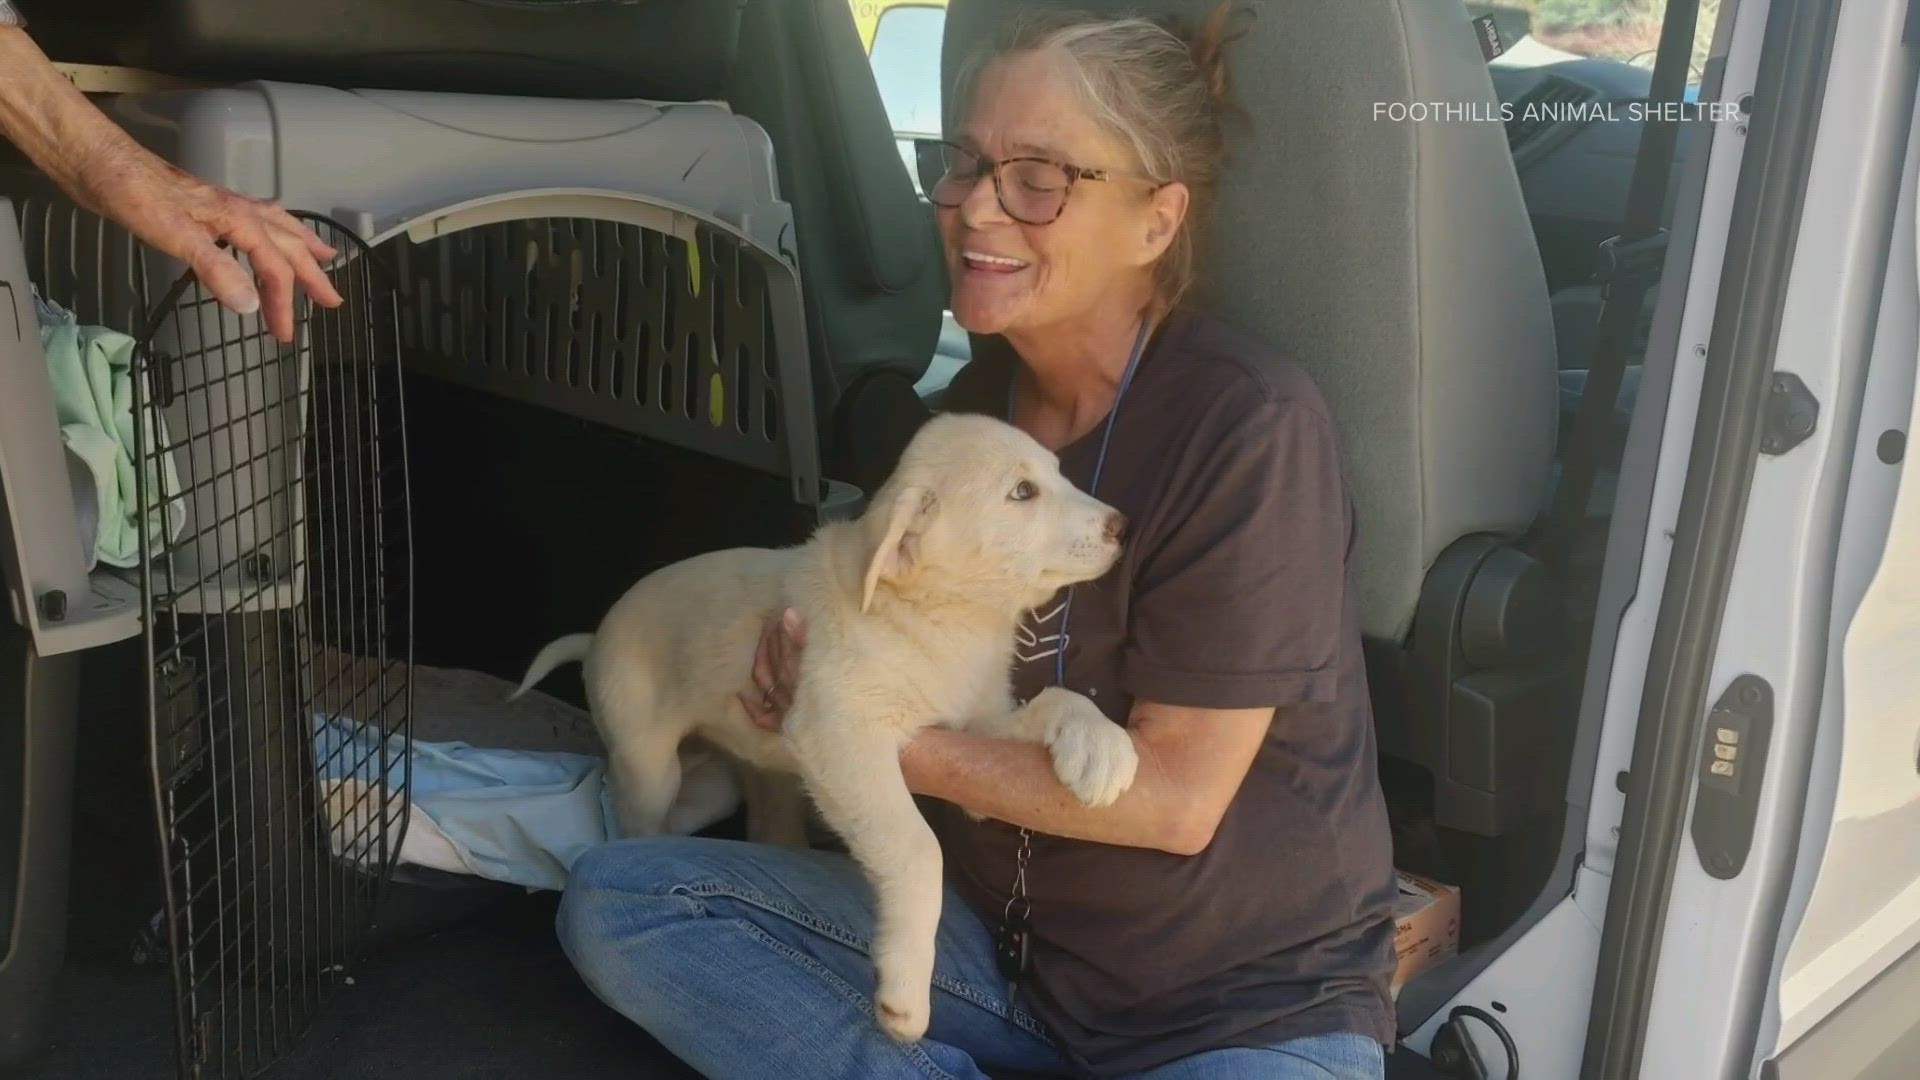 Foothills Animal Shelter in Colorado has 12 new dogs from Pottawattamie County, Oklahoma, following a devastating tornado.